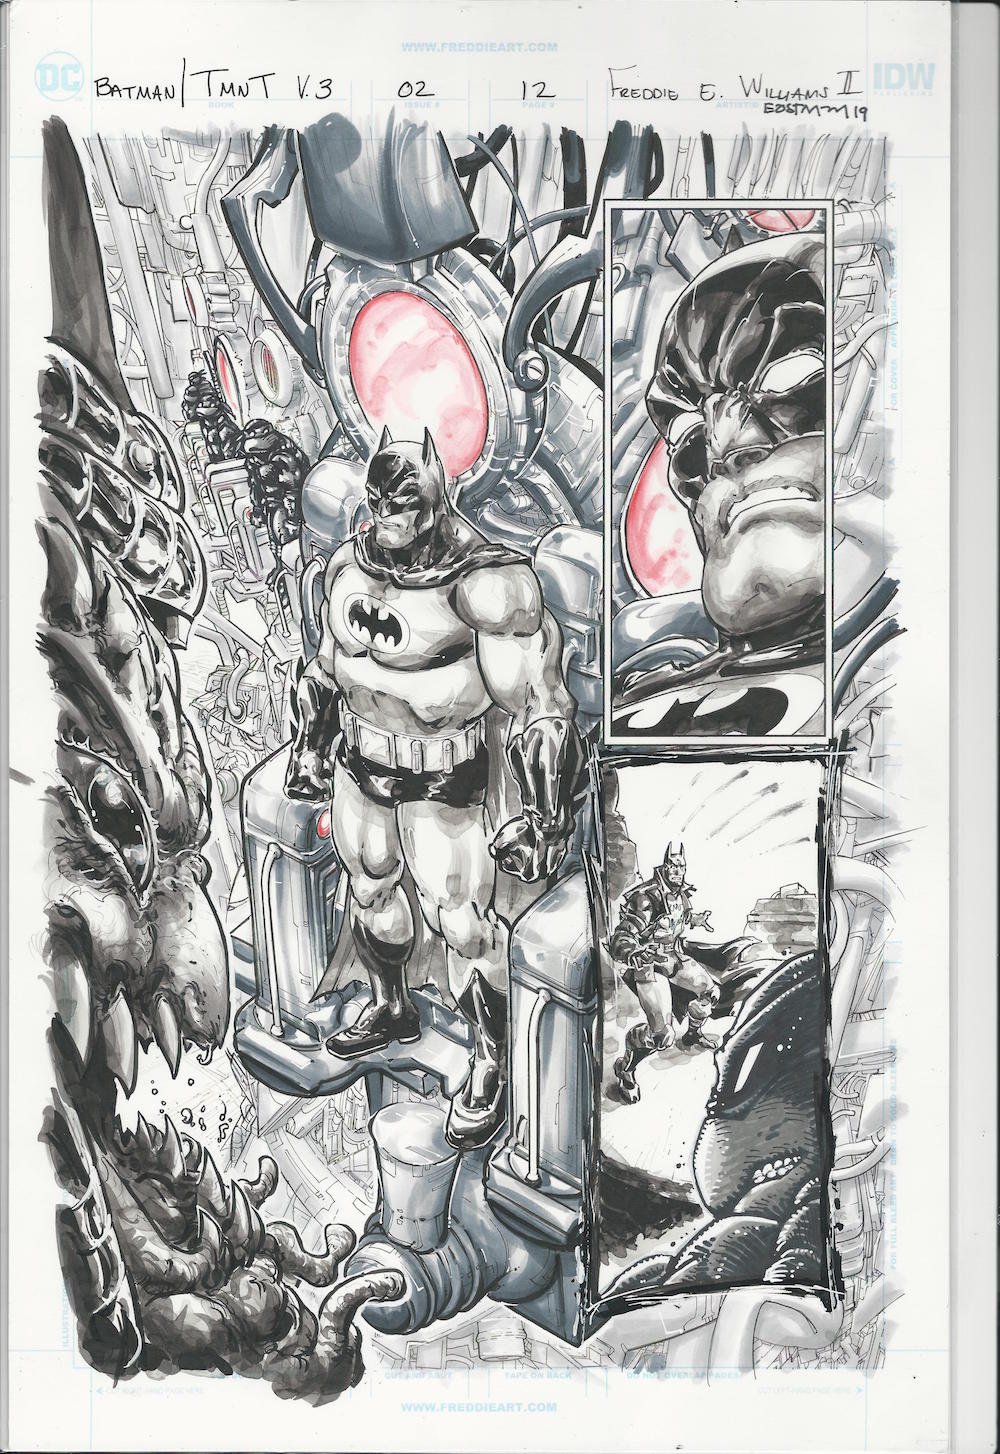 Batman TMNT Series 3 Issue 2 Pg 12